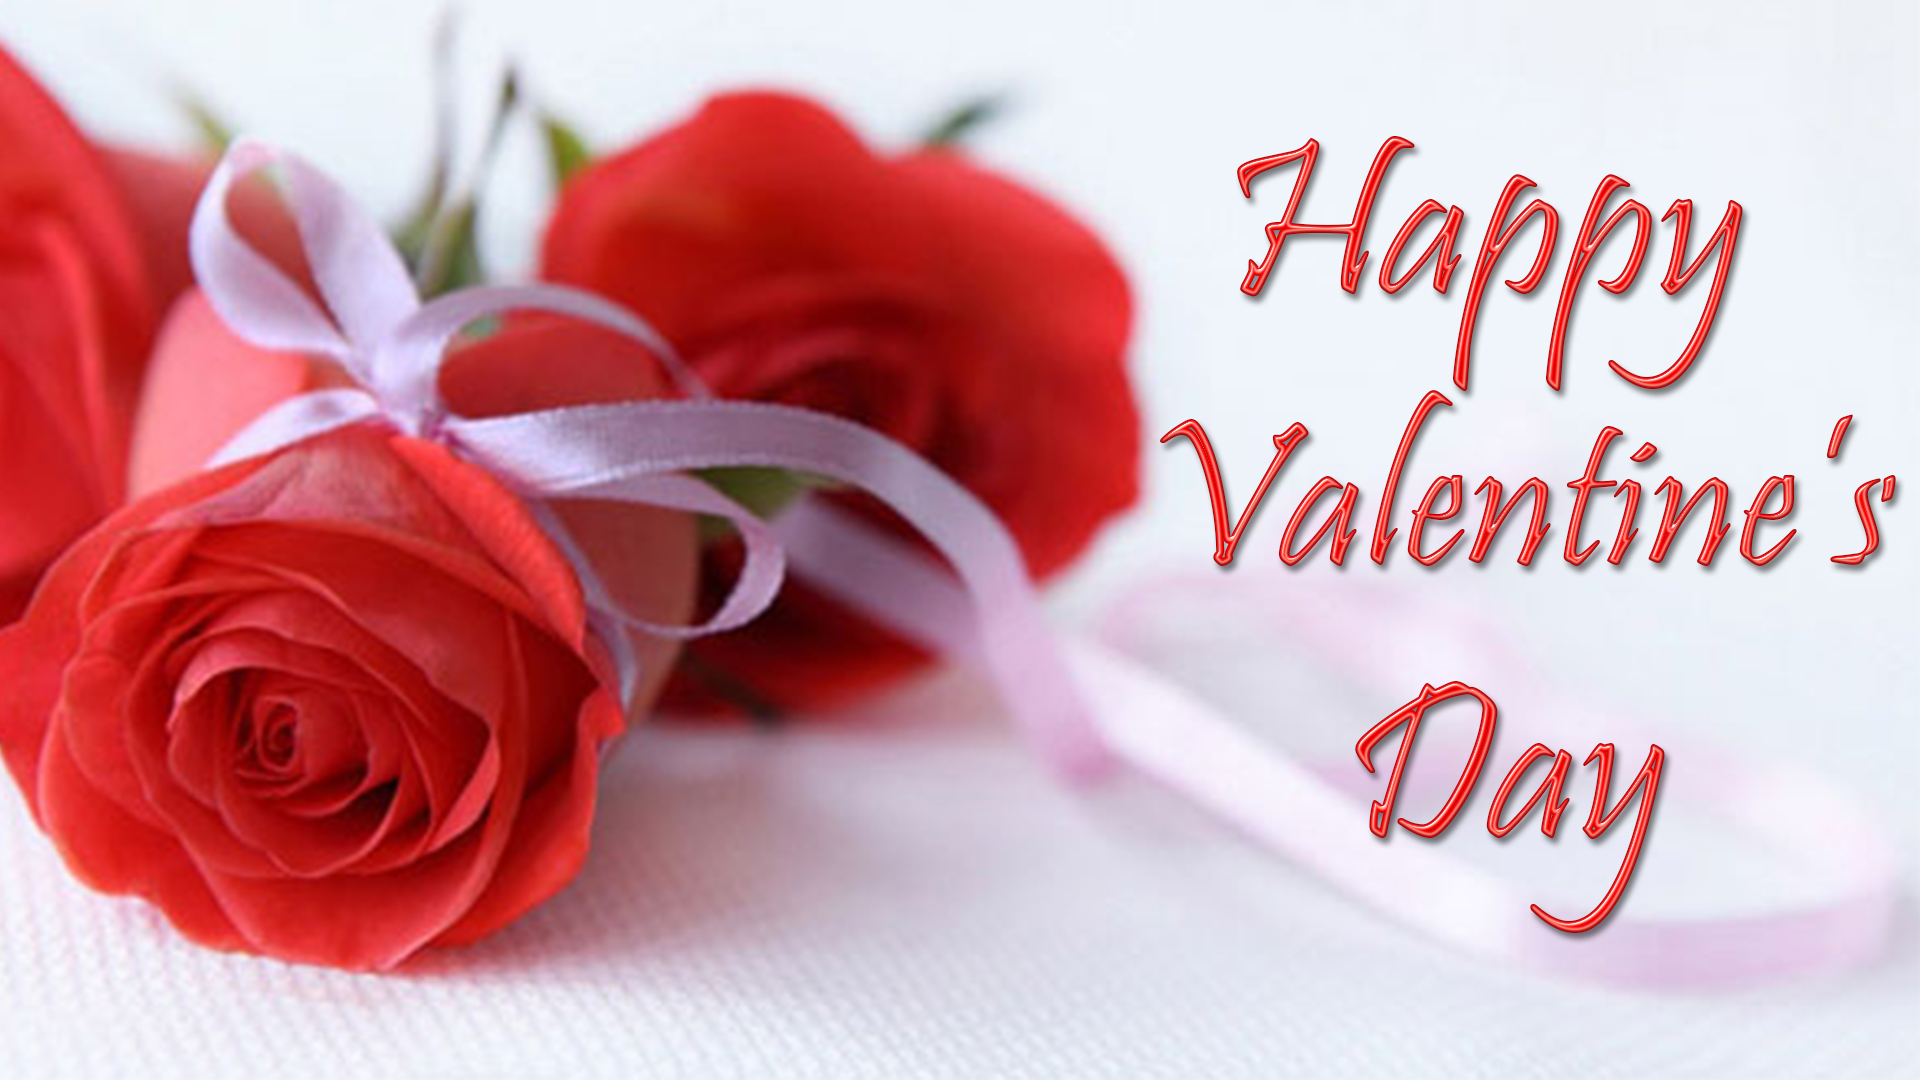 happy valentines day 2019 hd image